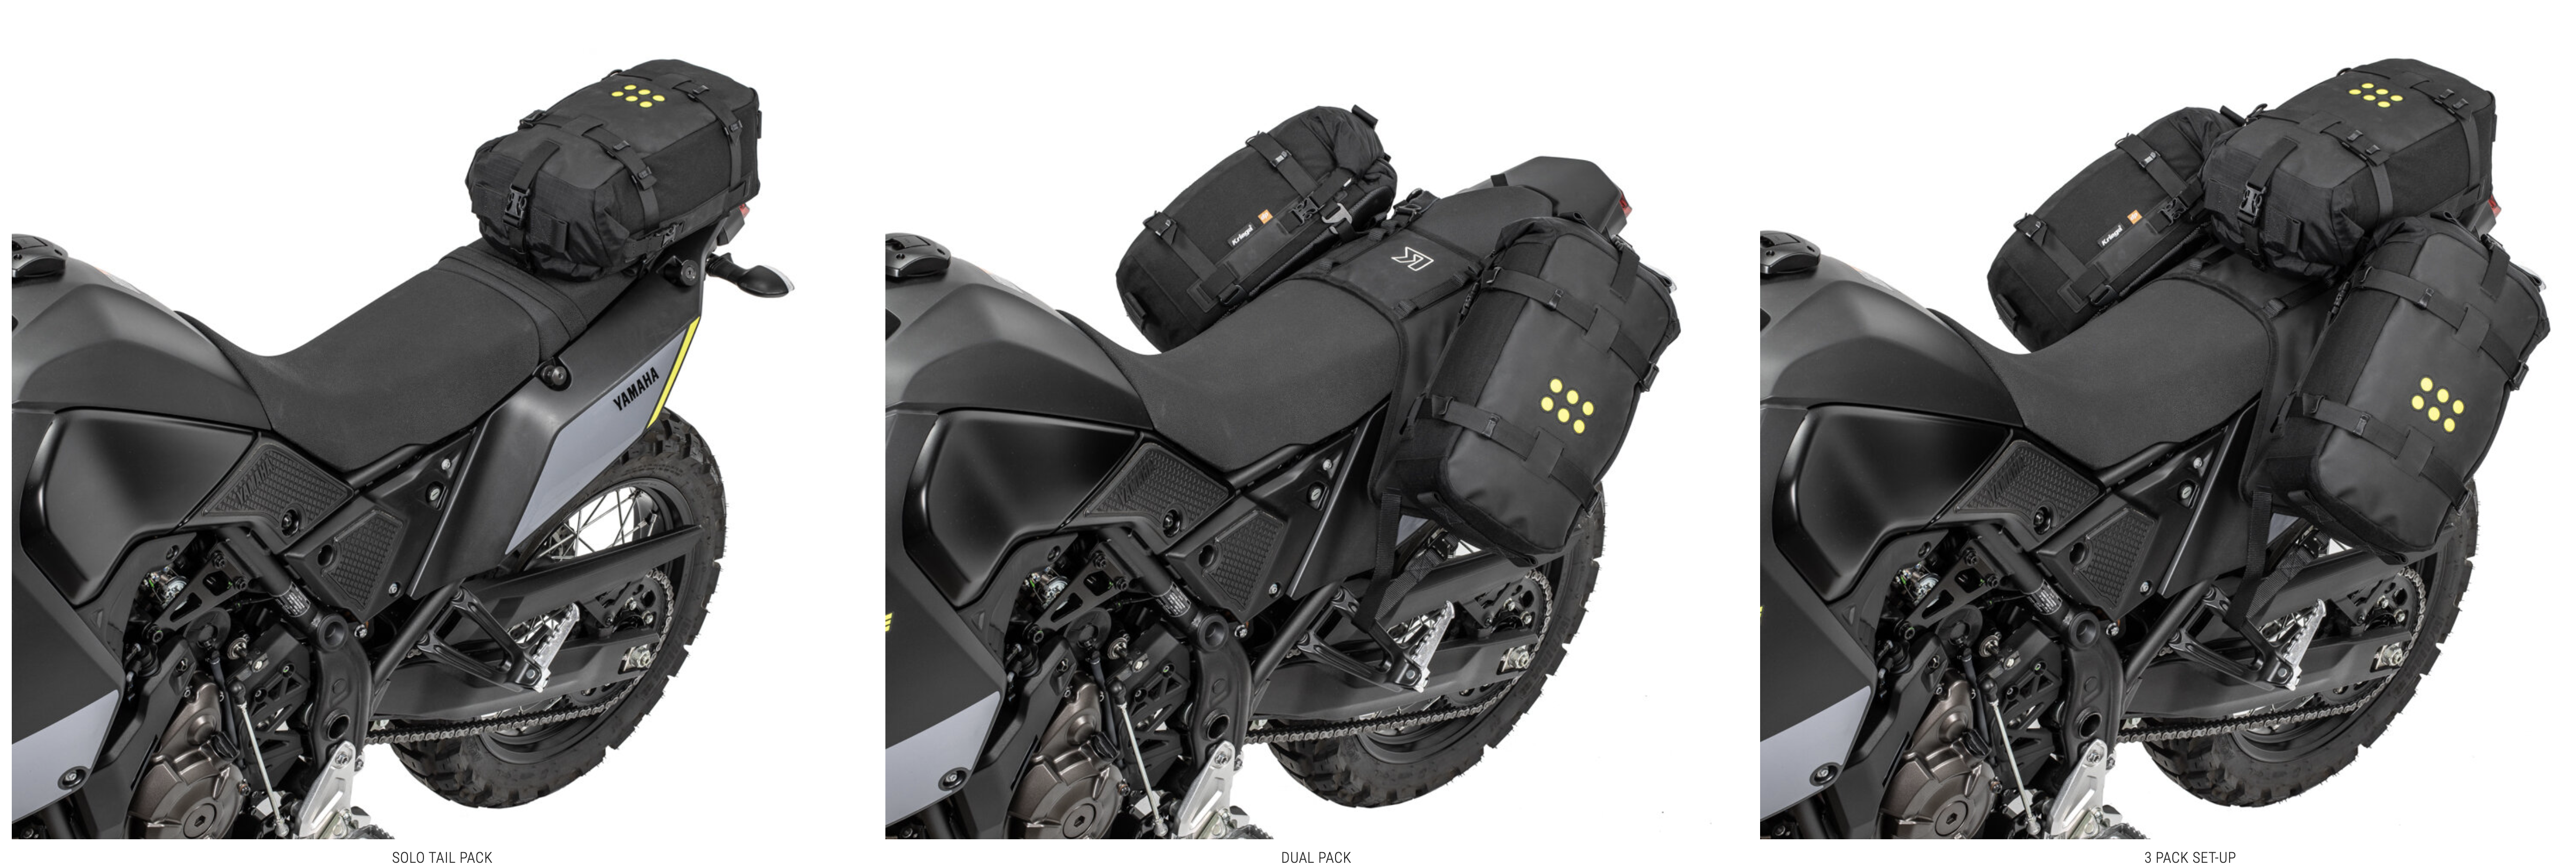 Kriega-OS-Base-Yamaha-Tenere-700-mounting-system-fu-r-OS-bags-selection